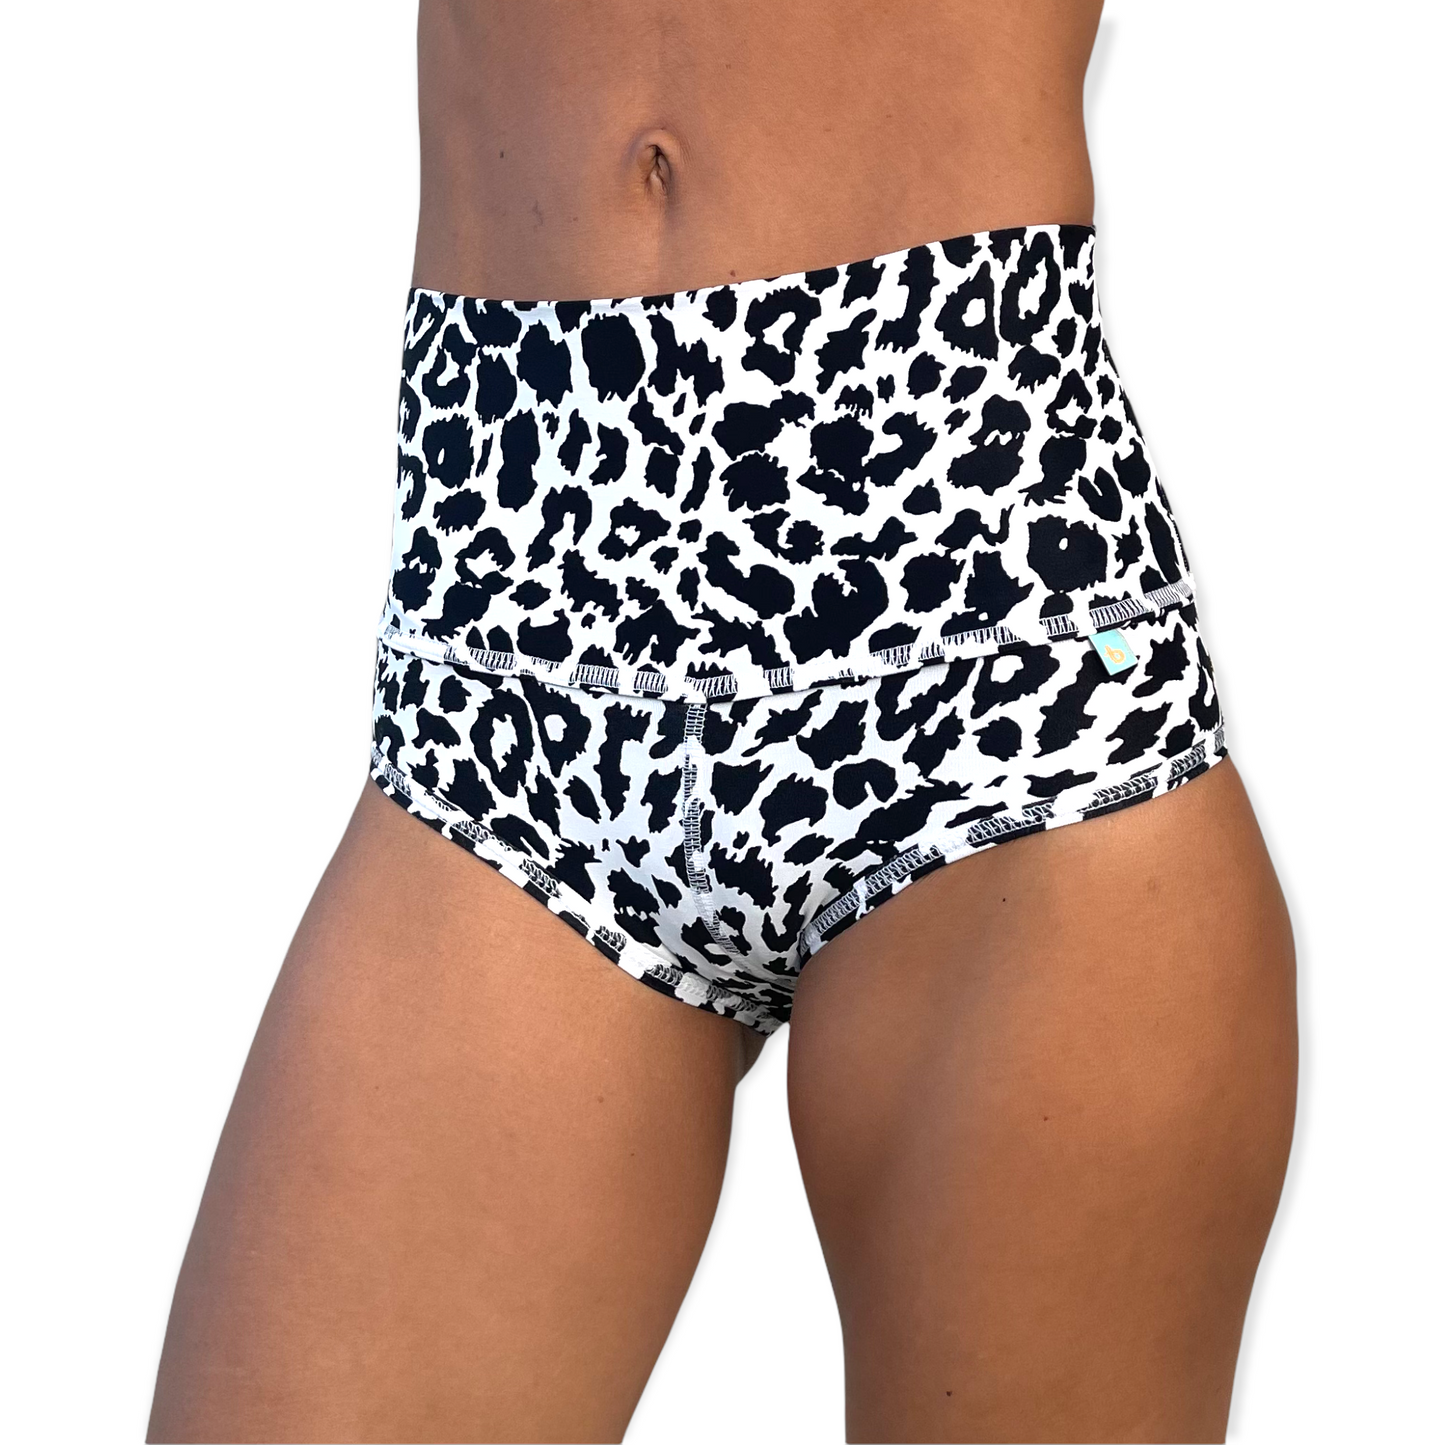 Black and white animal print high waist shorts for Bikram Hot Yoga